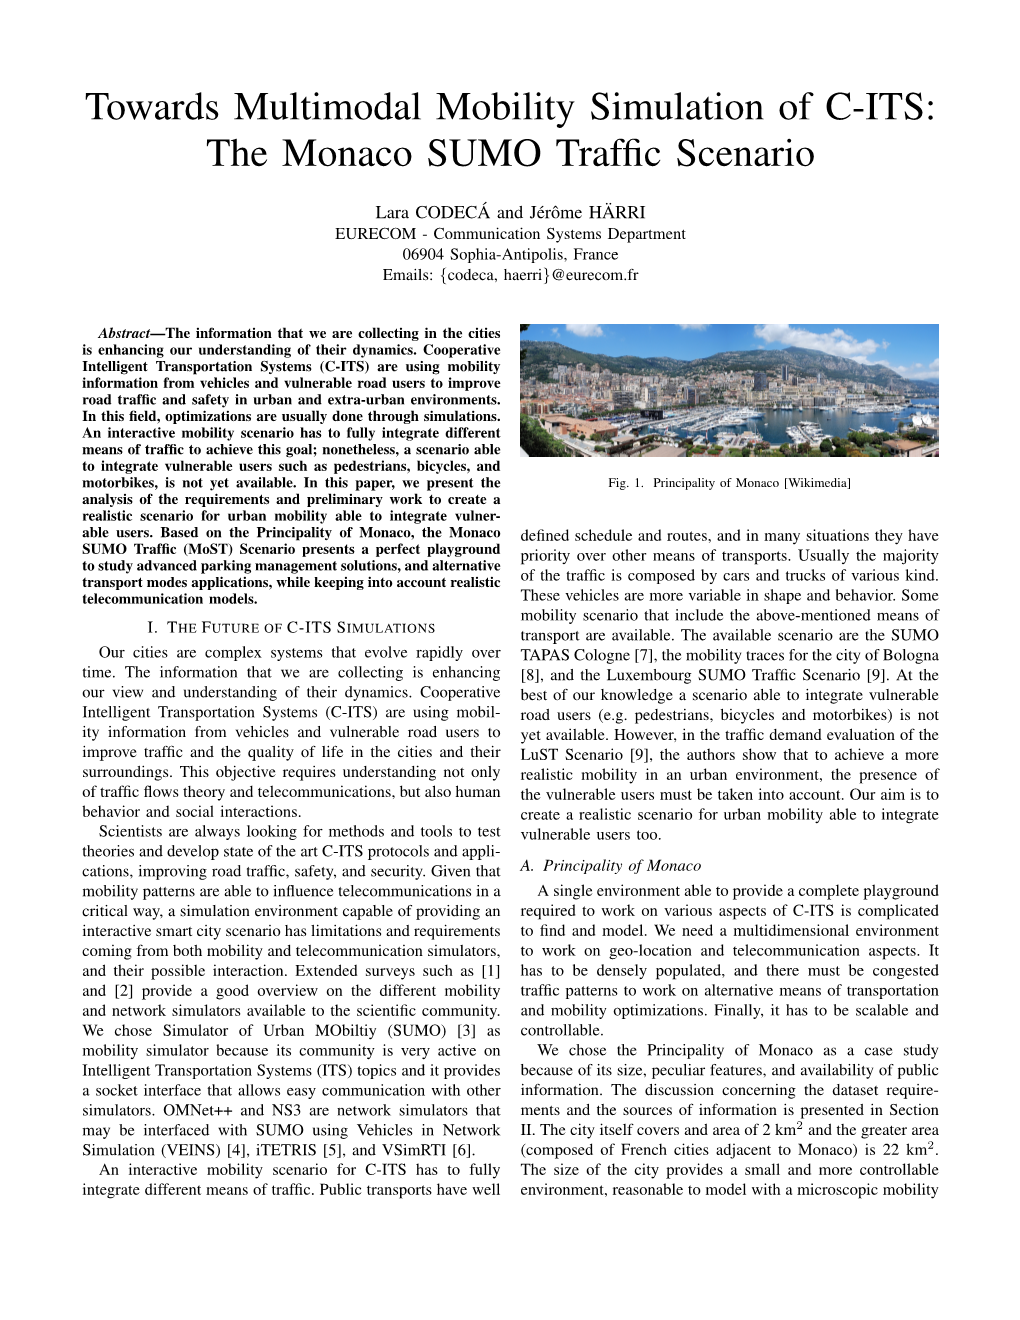 The Monaco SUMO Traffic Scenario